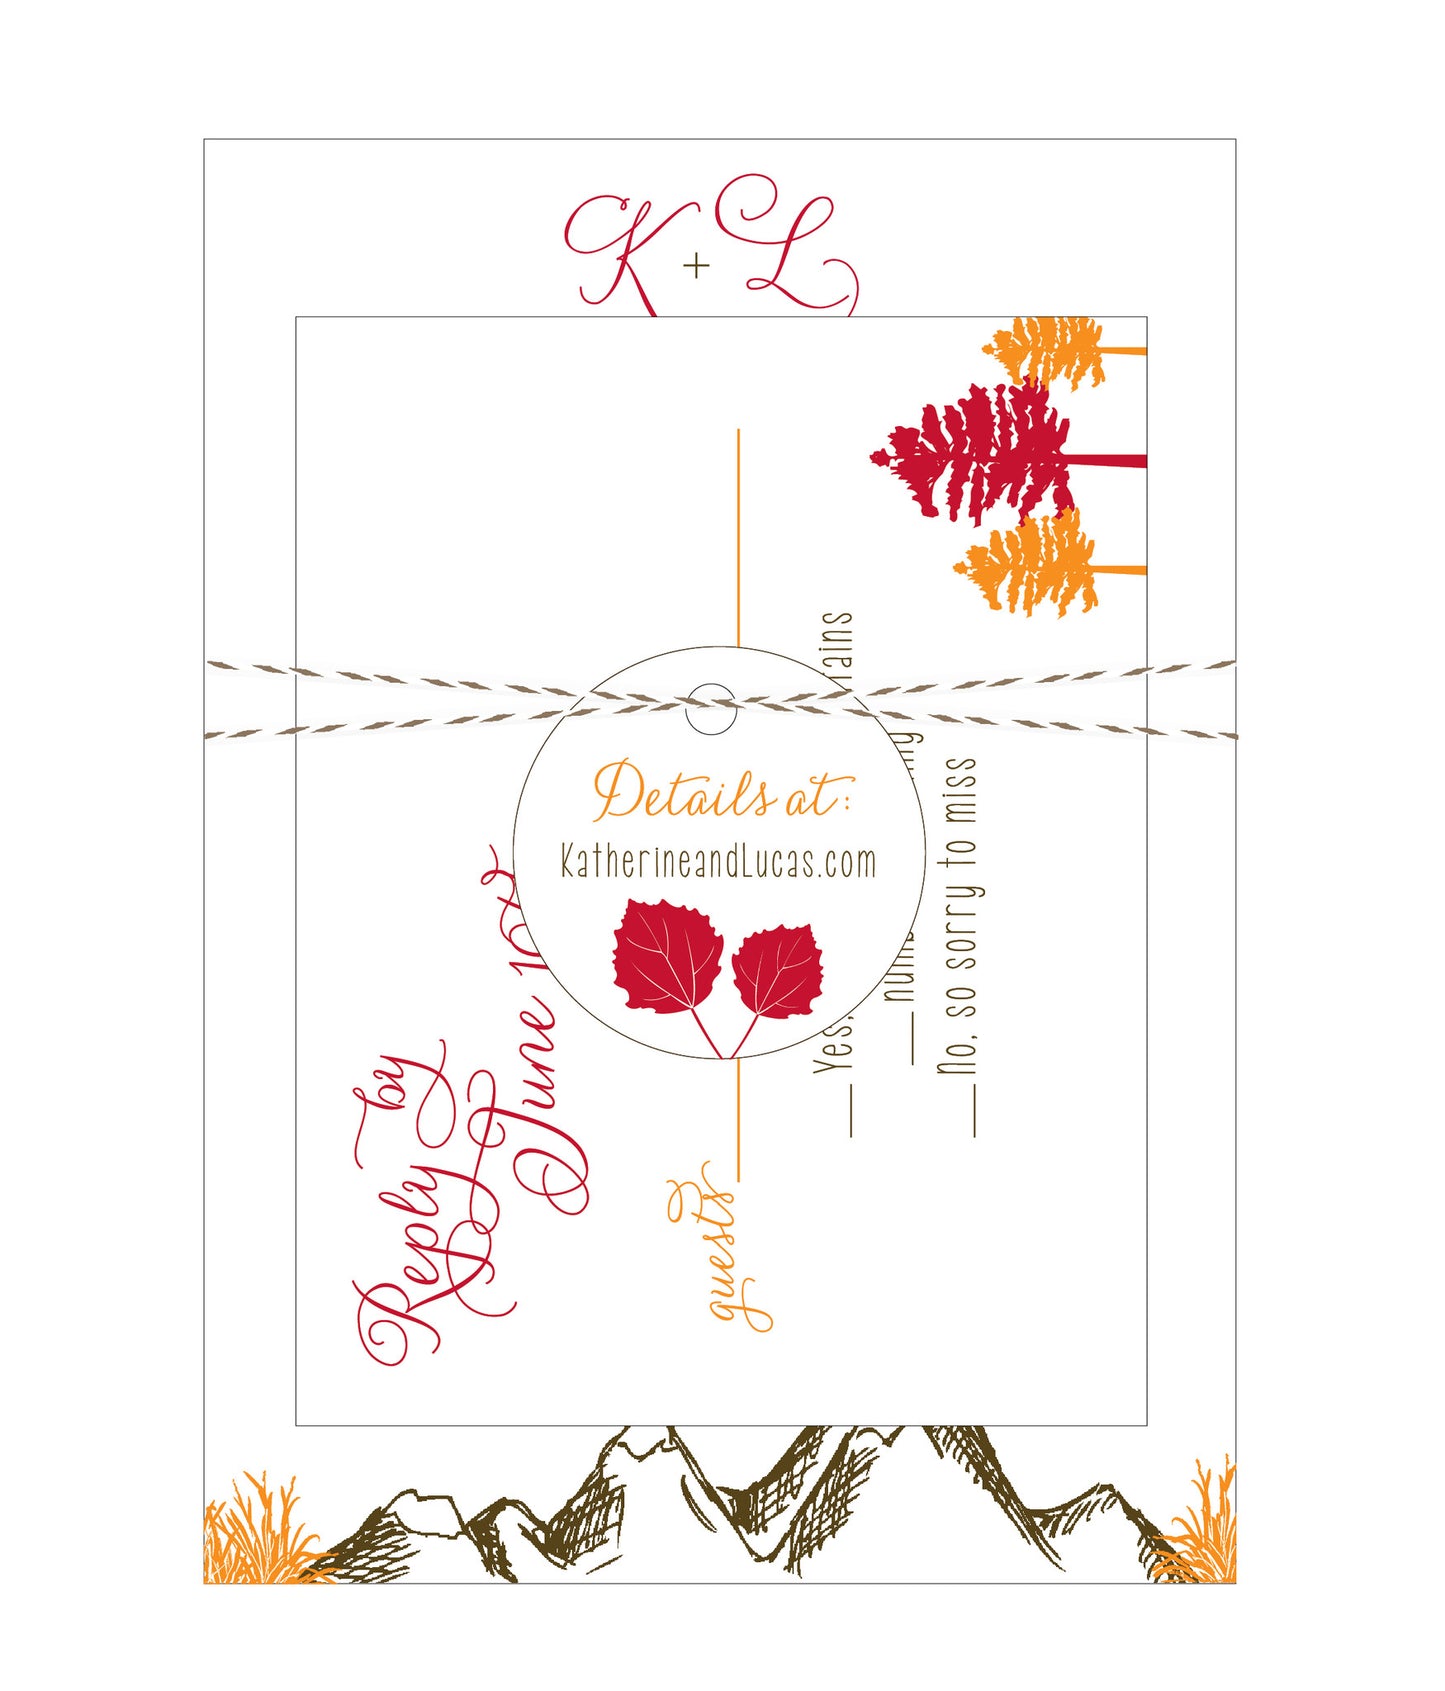 Mountain Alpine Trees and Aspen Leaves Wedding Invitation Collection - Idea Chíc